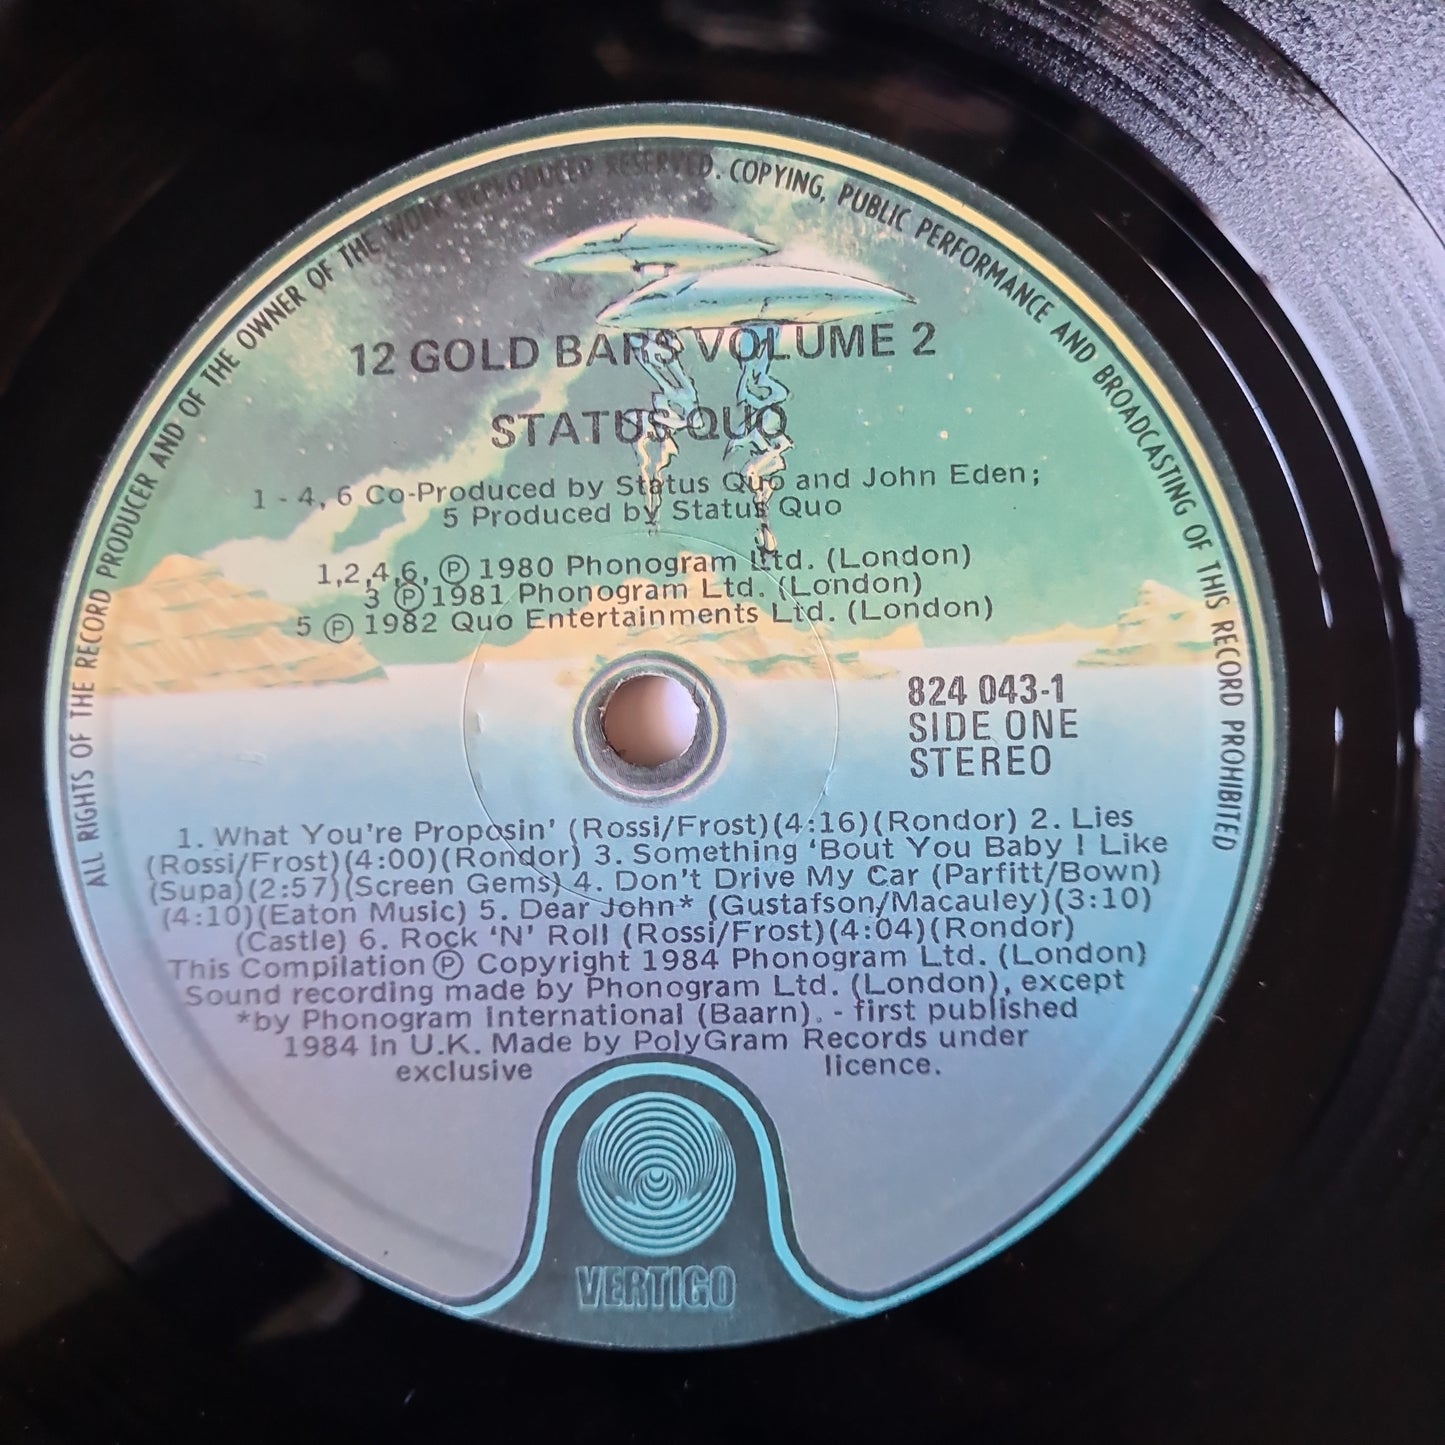 Status Quo – 12 Gold Bars Volume 2 (Greatest Hits) - 1984 - Vinyl Record